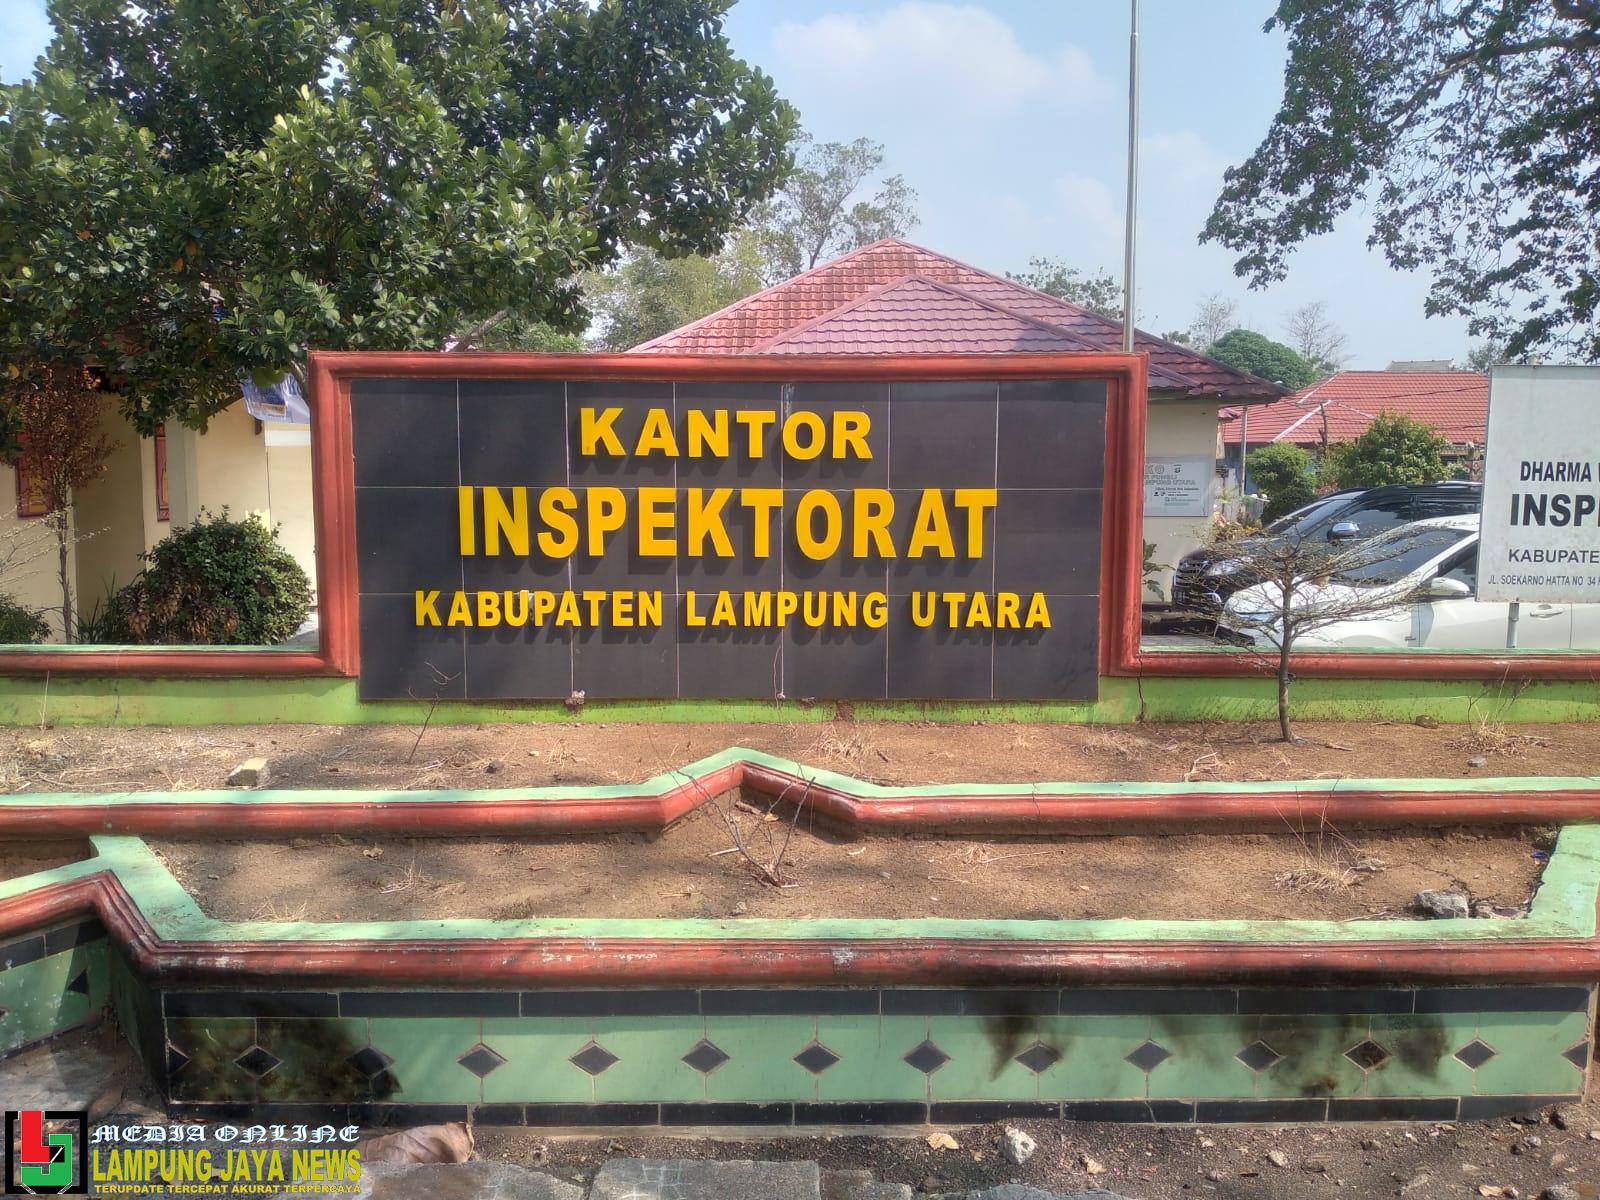 Inspektorat Kabupaten Lampung Utara Akan Menindak Terkait Permasalahan Yang Ada Di Desa Negeri Sakti